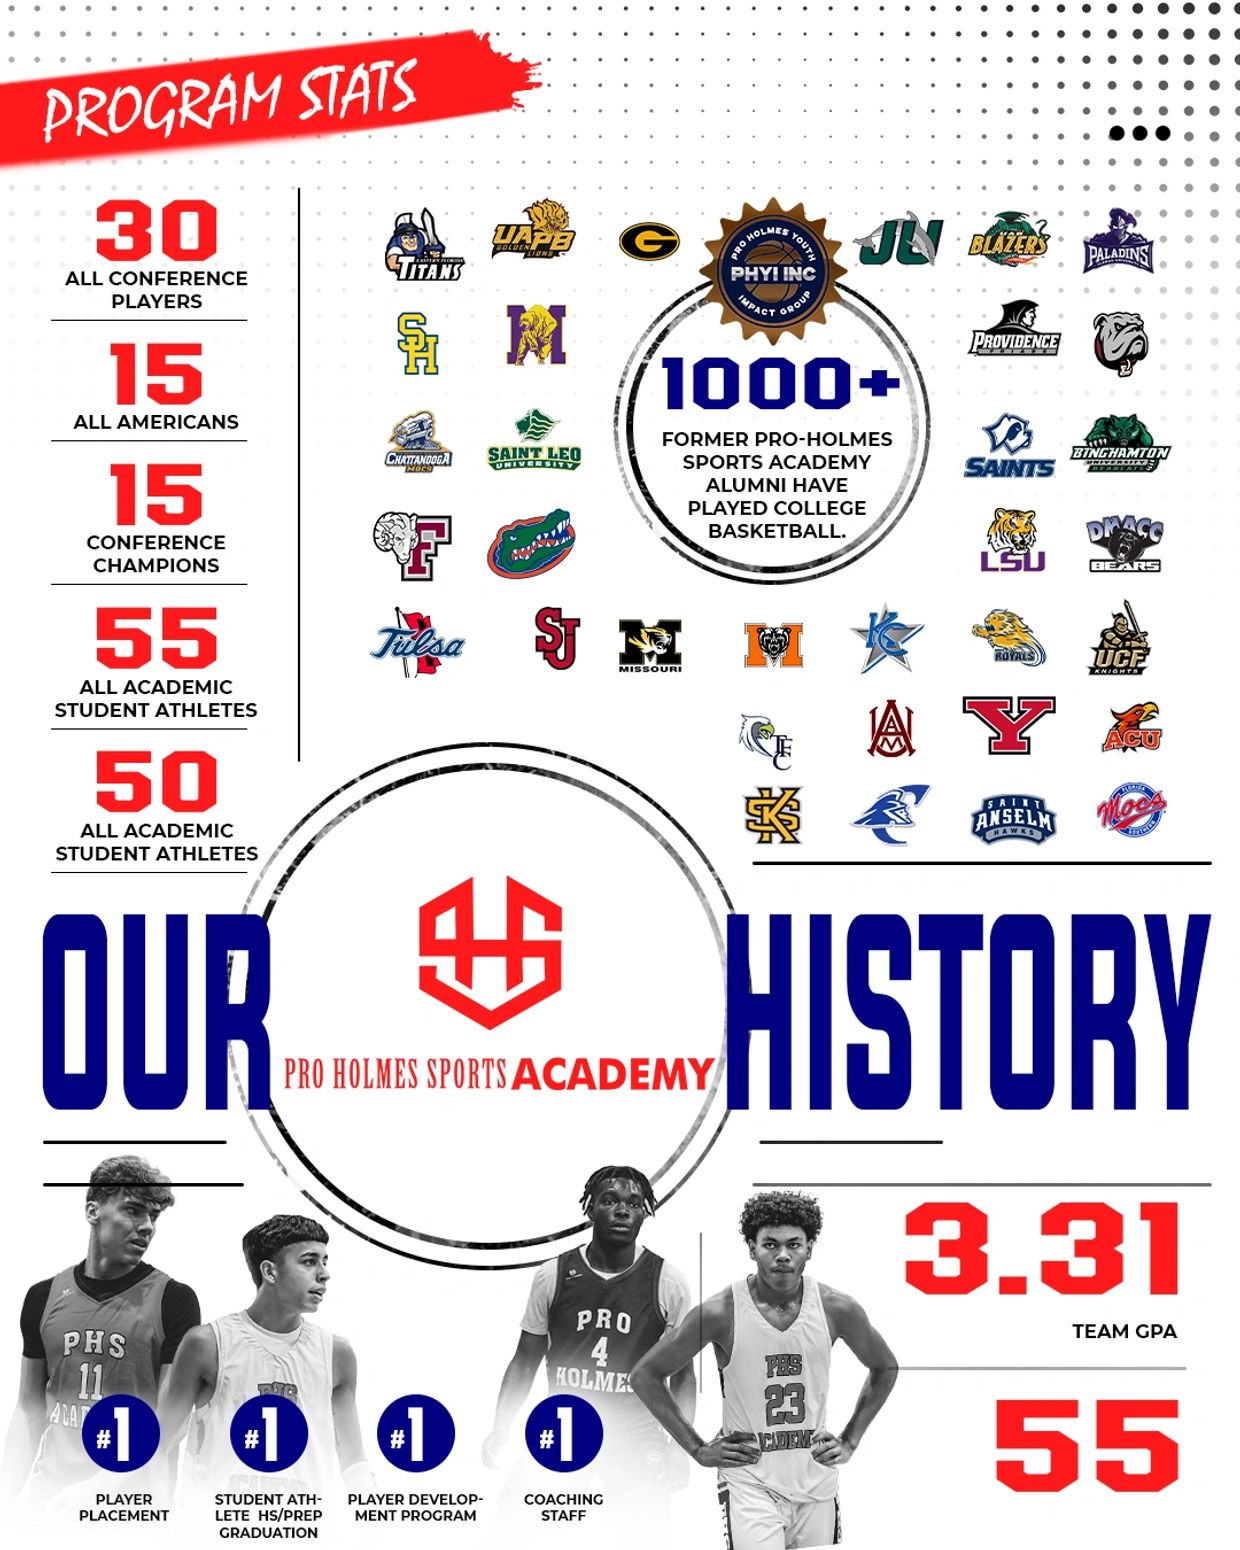 Post Grad Basketball  | PHS Academy . 